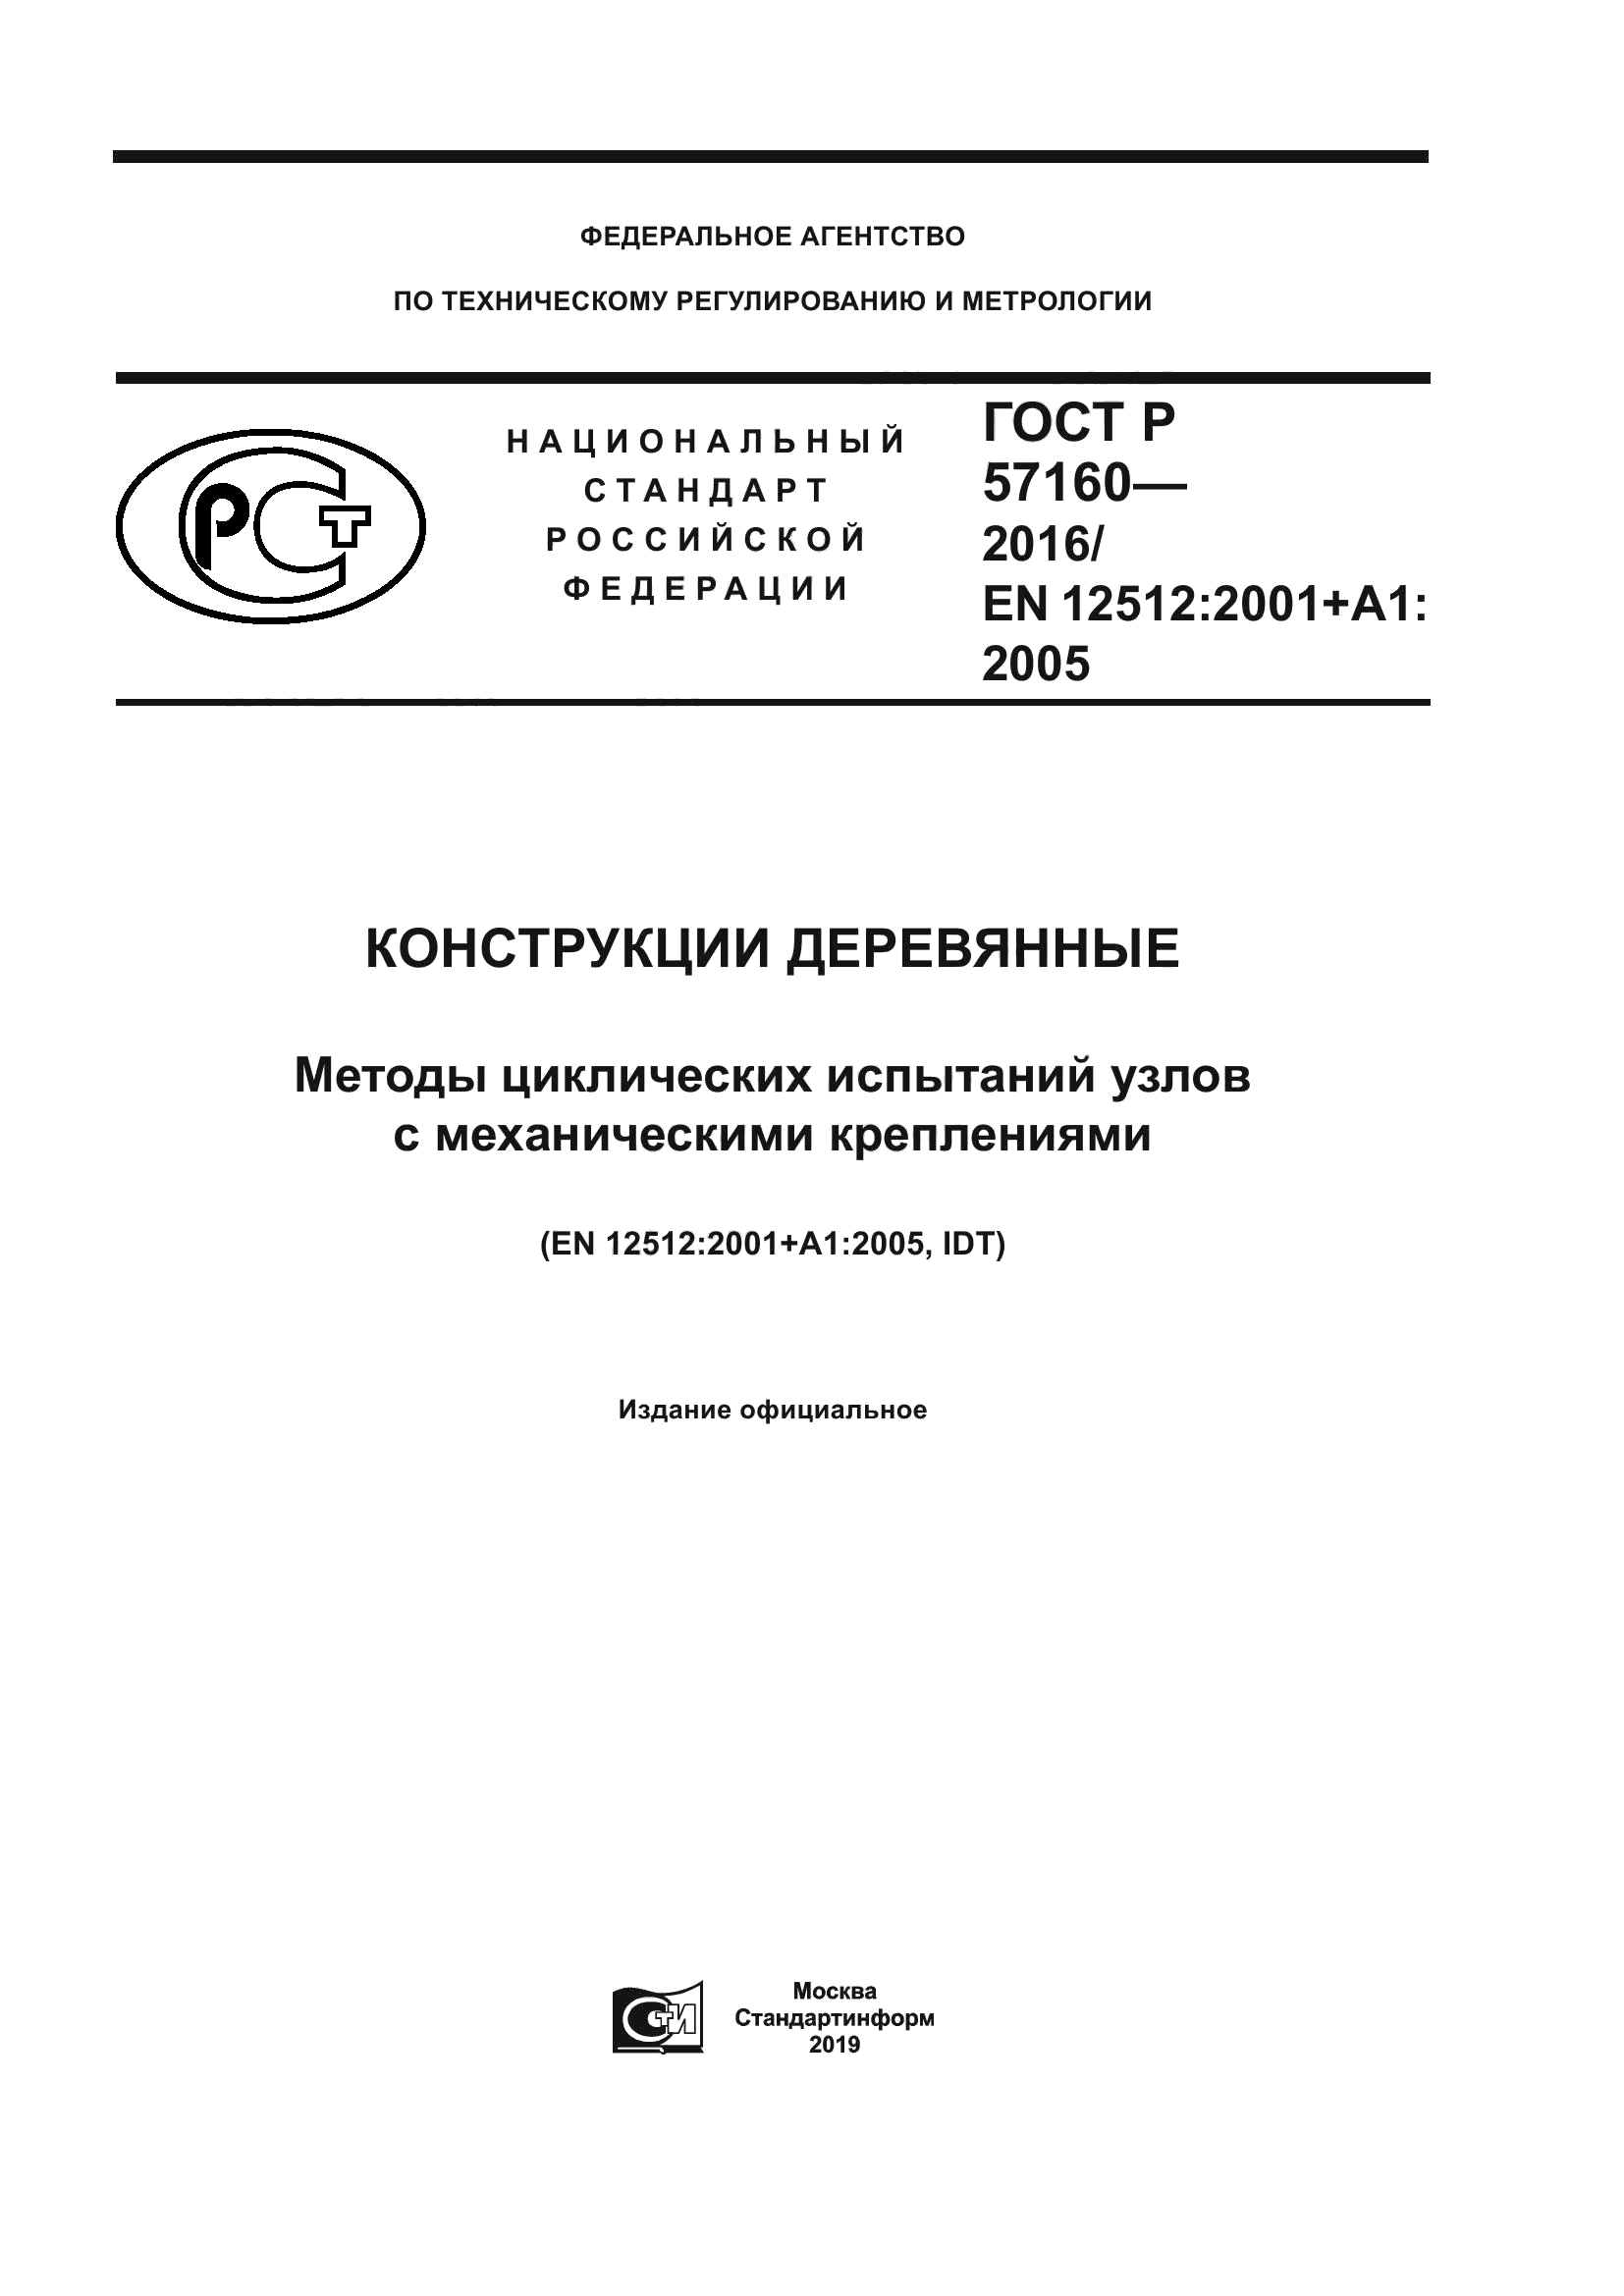 ГОСТ Р 57160-2016